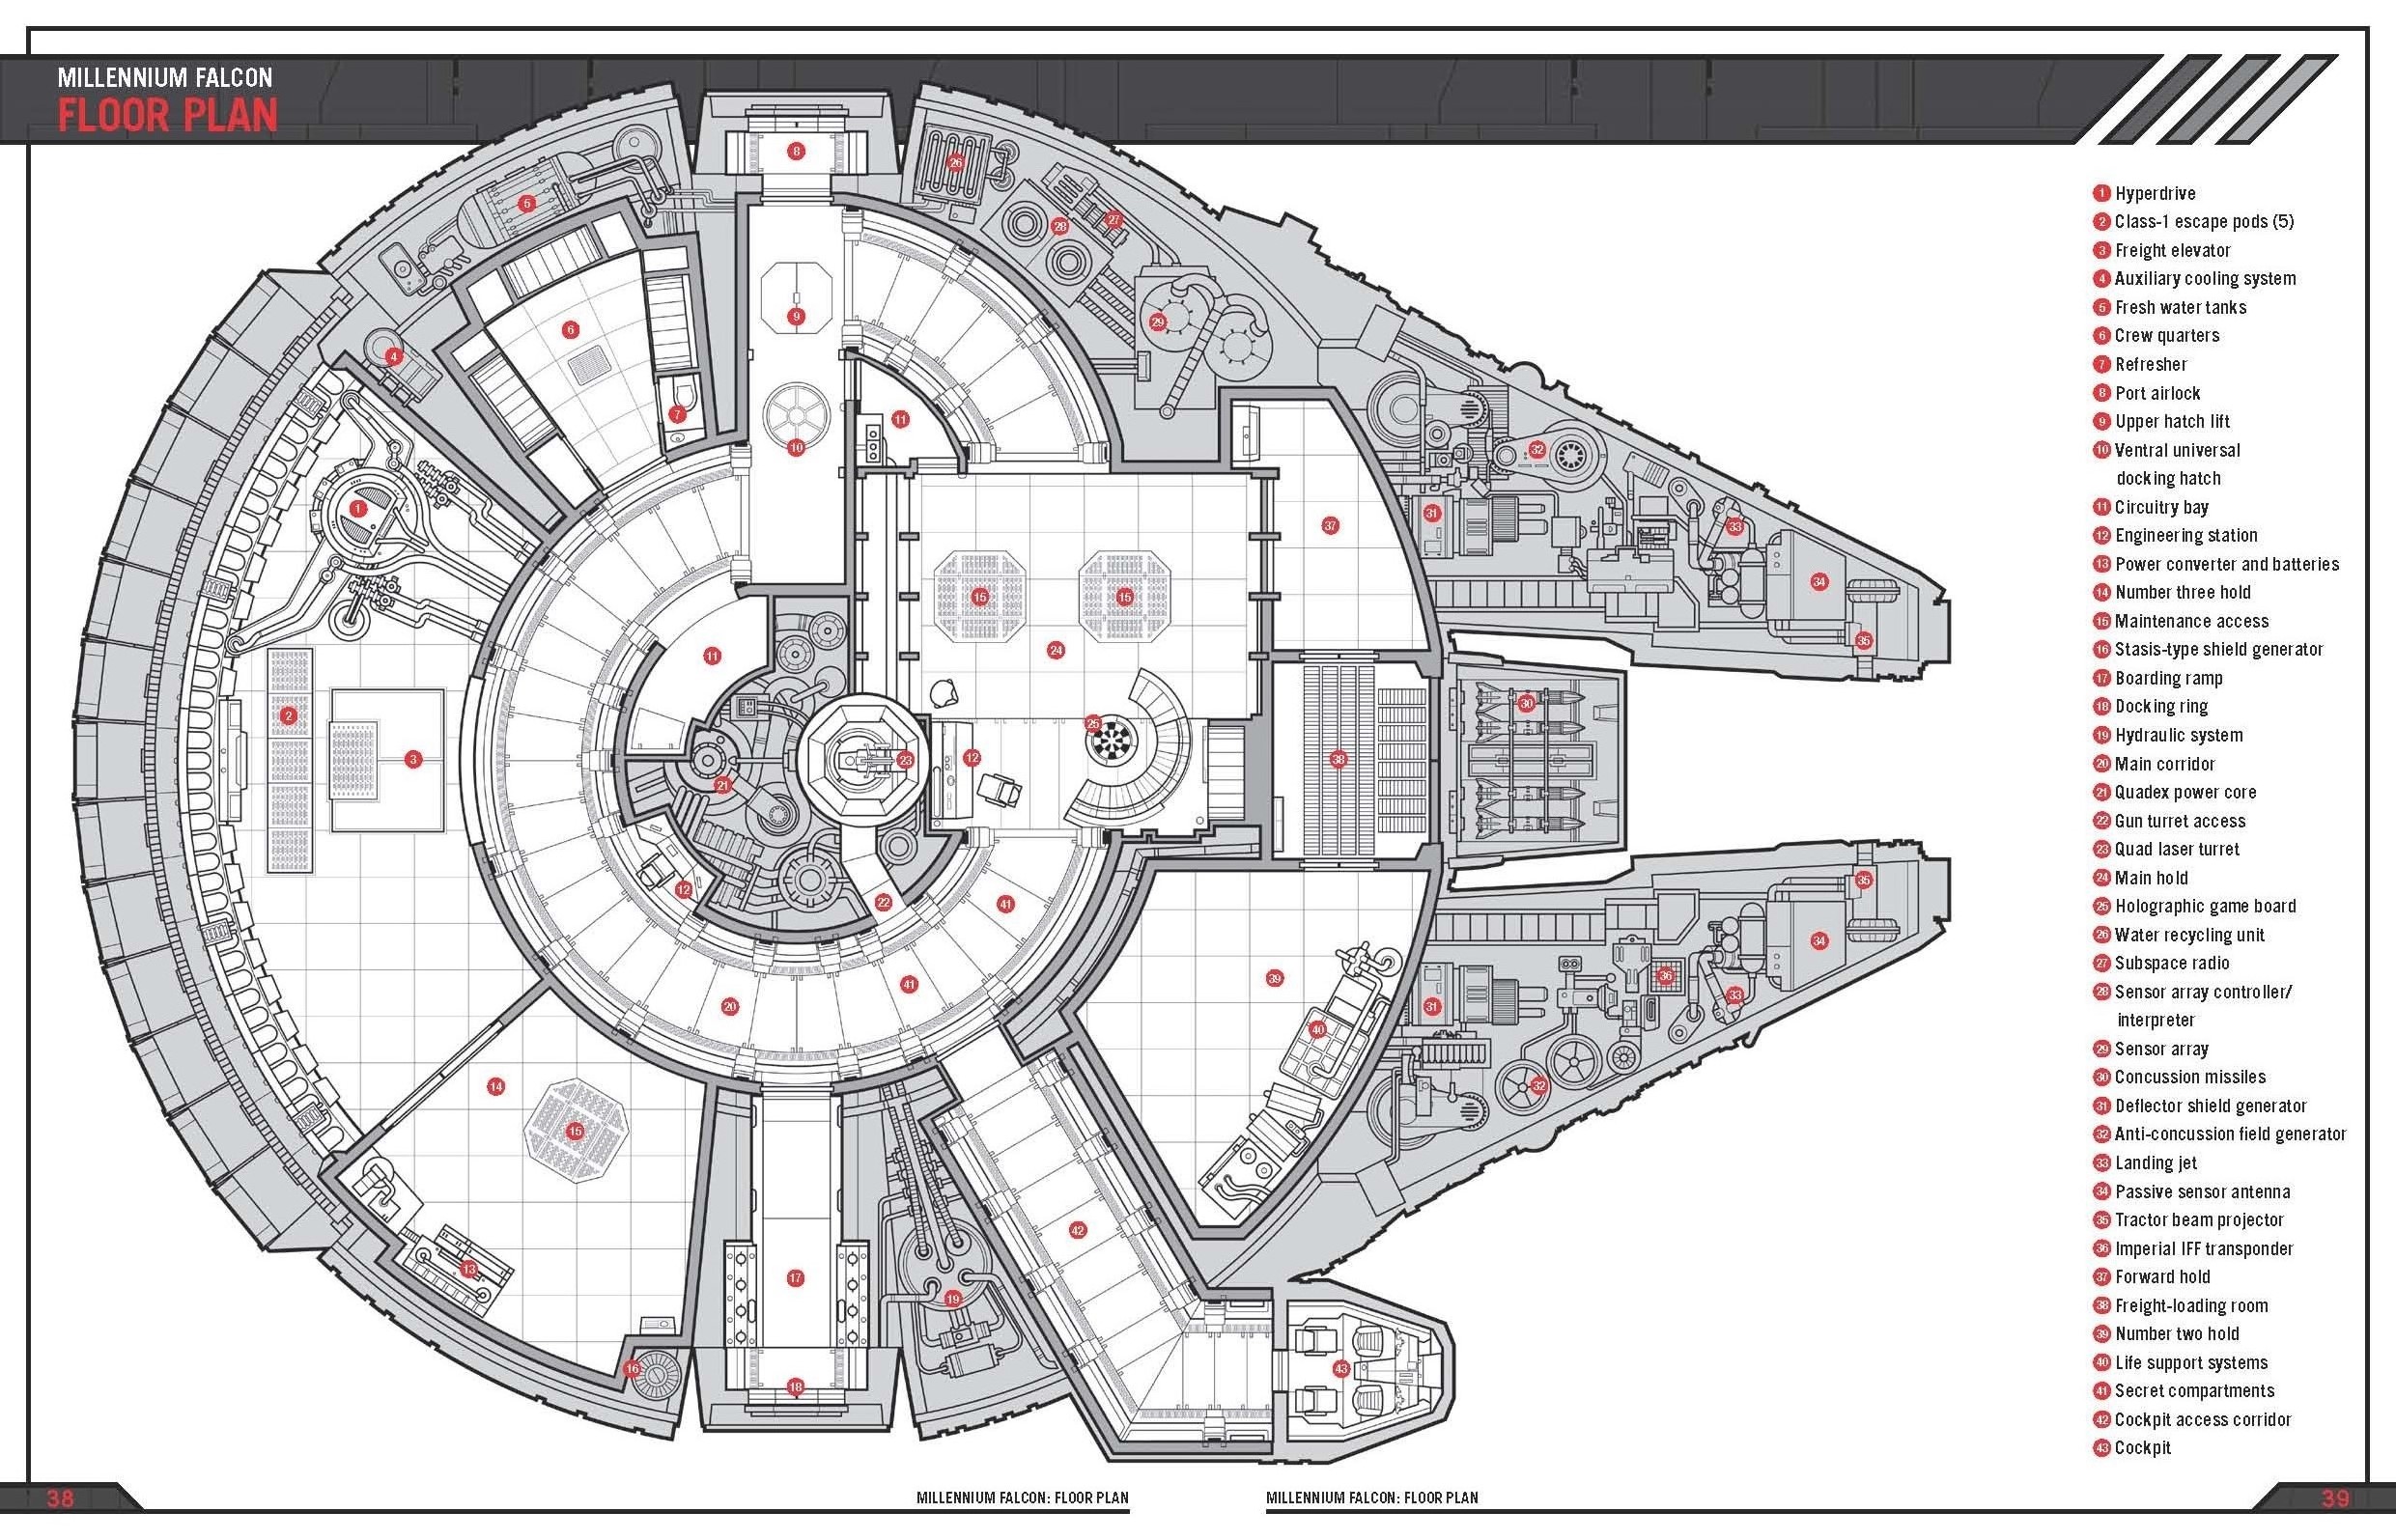 758 - Floor plan of the Millennium Falcon from the Haynes Manual.jpg